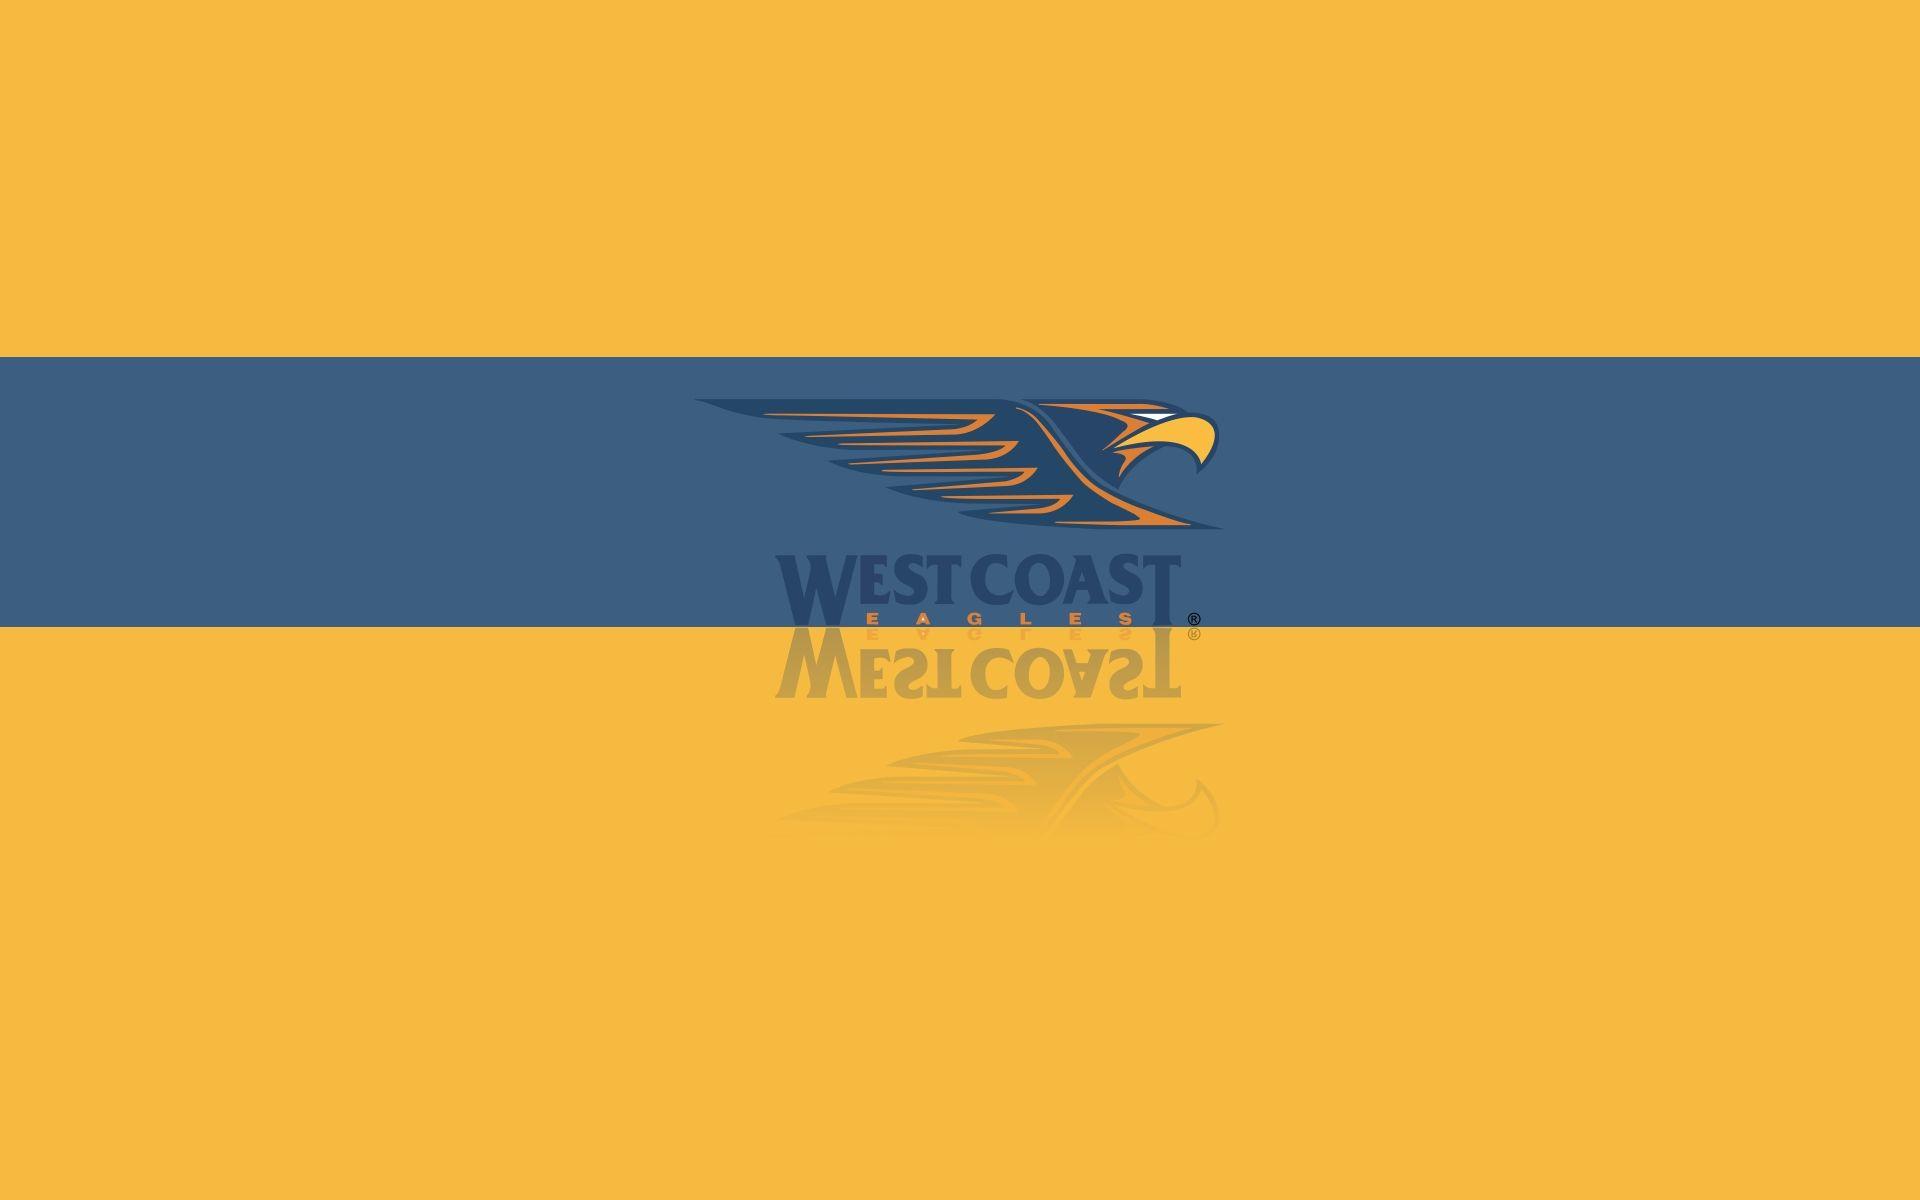 West Coast Eagles FC wallpaper, desktop background with team logo